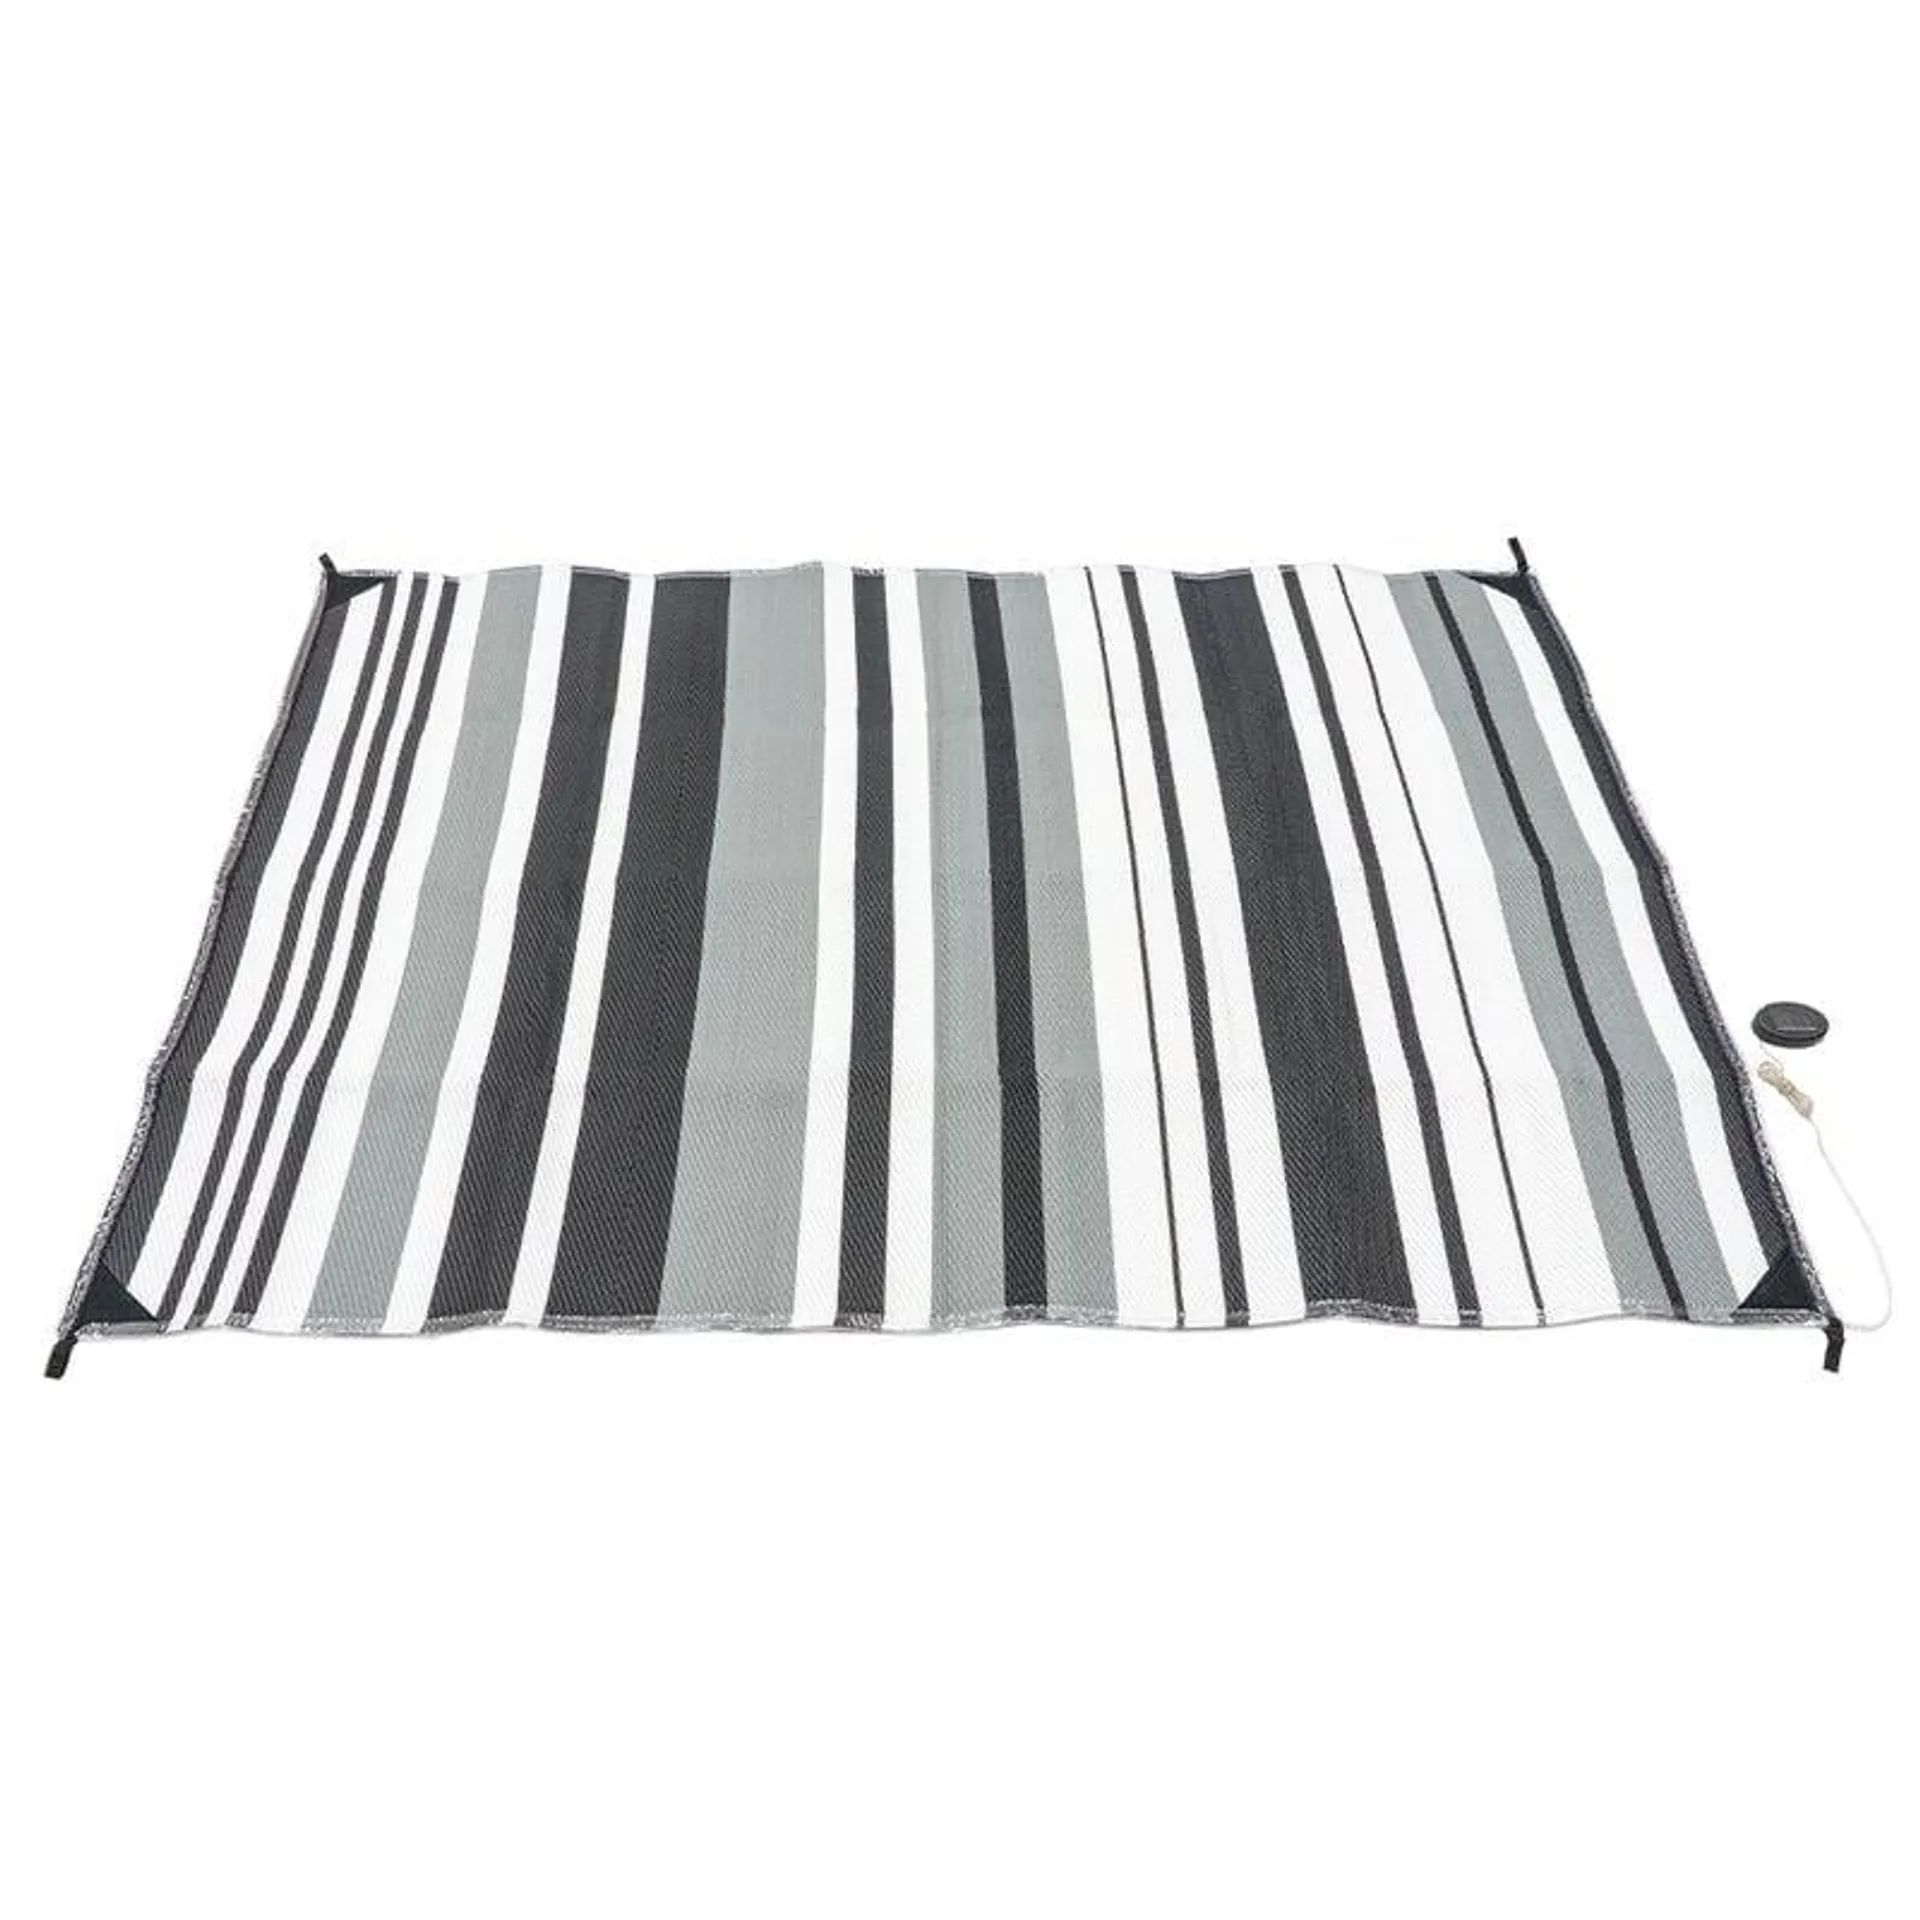 Venture Forward 5' x 7' Solar-Lighted Striped Patio Mat, Black/Gray/White